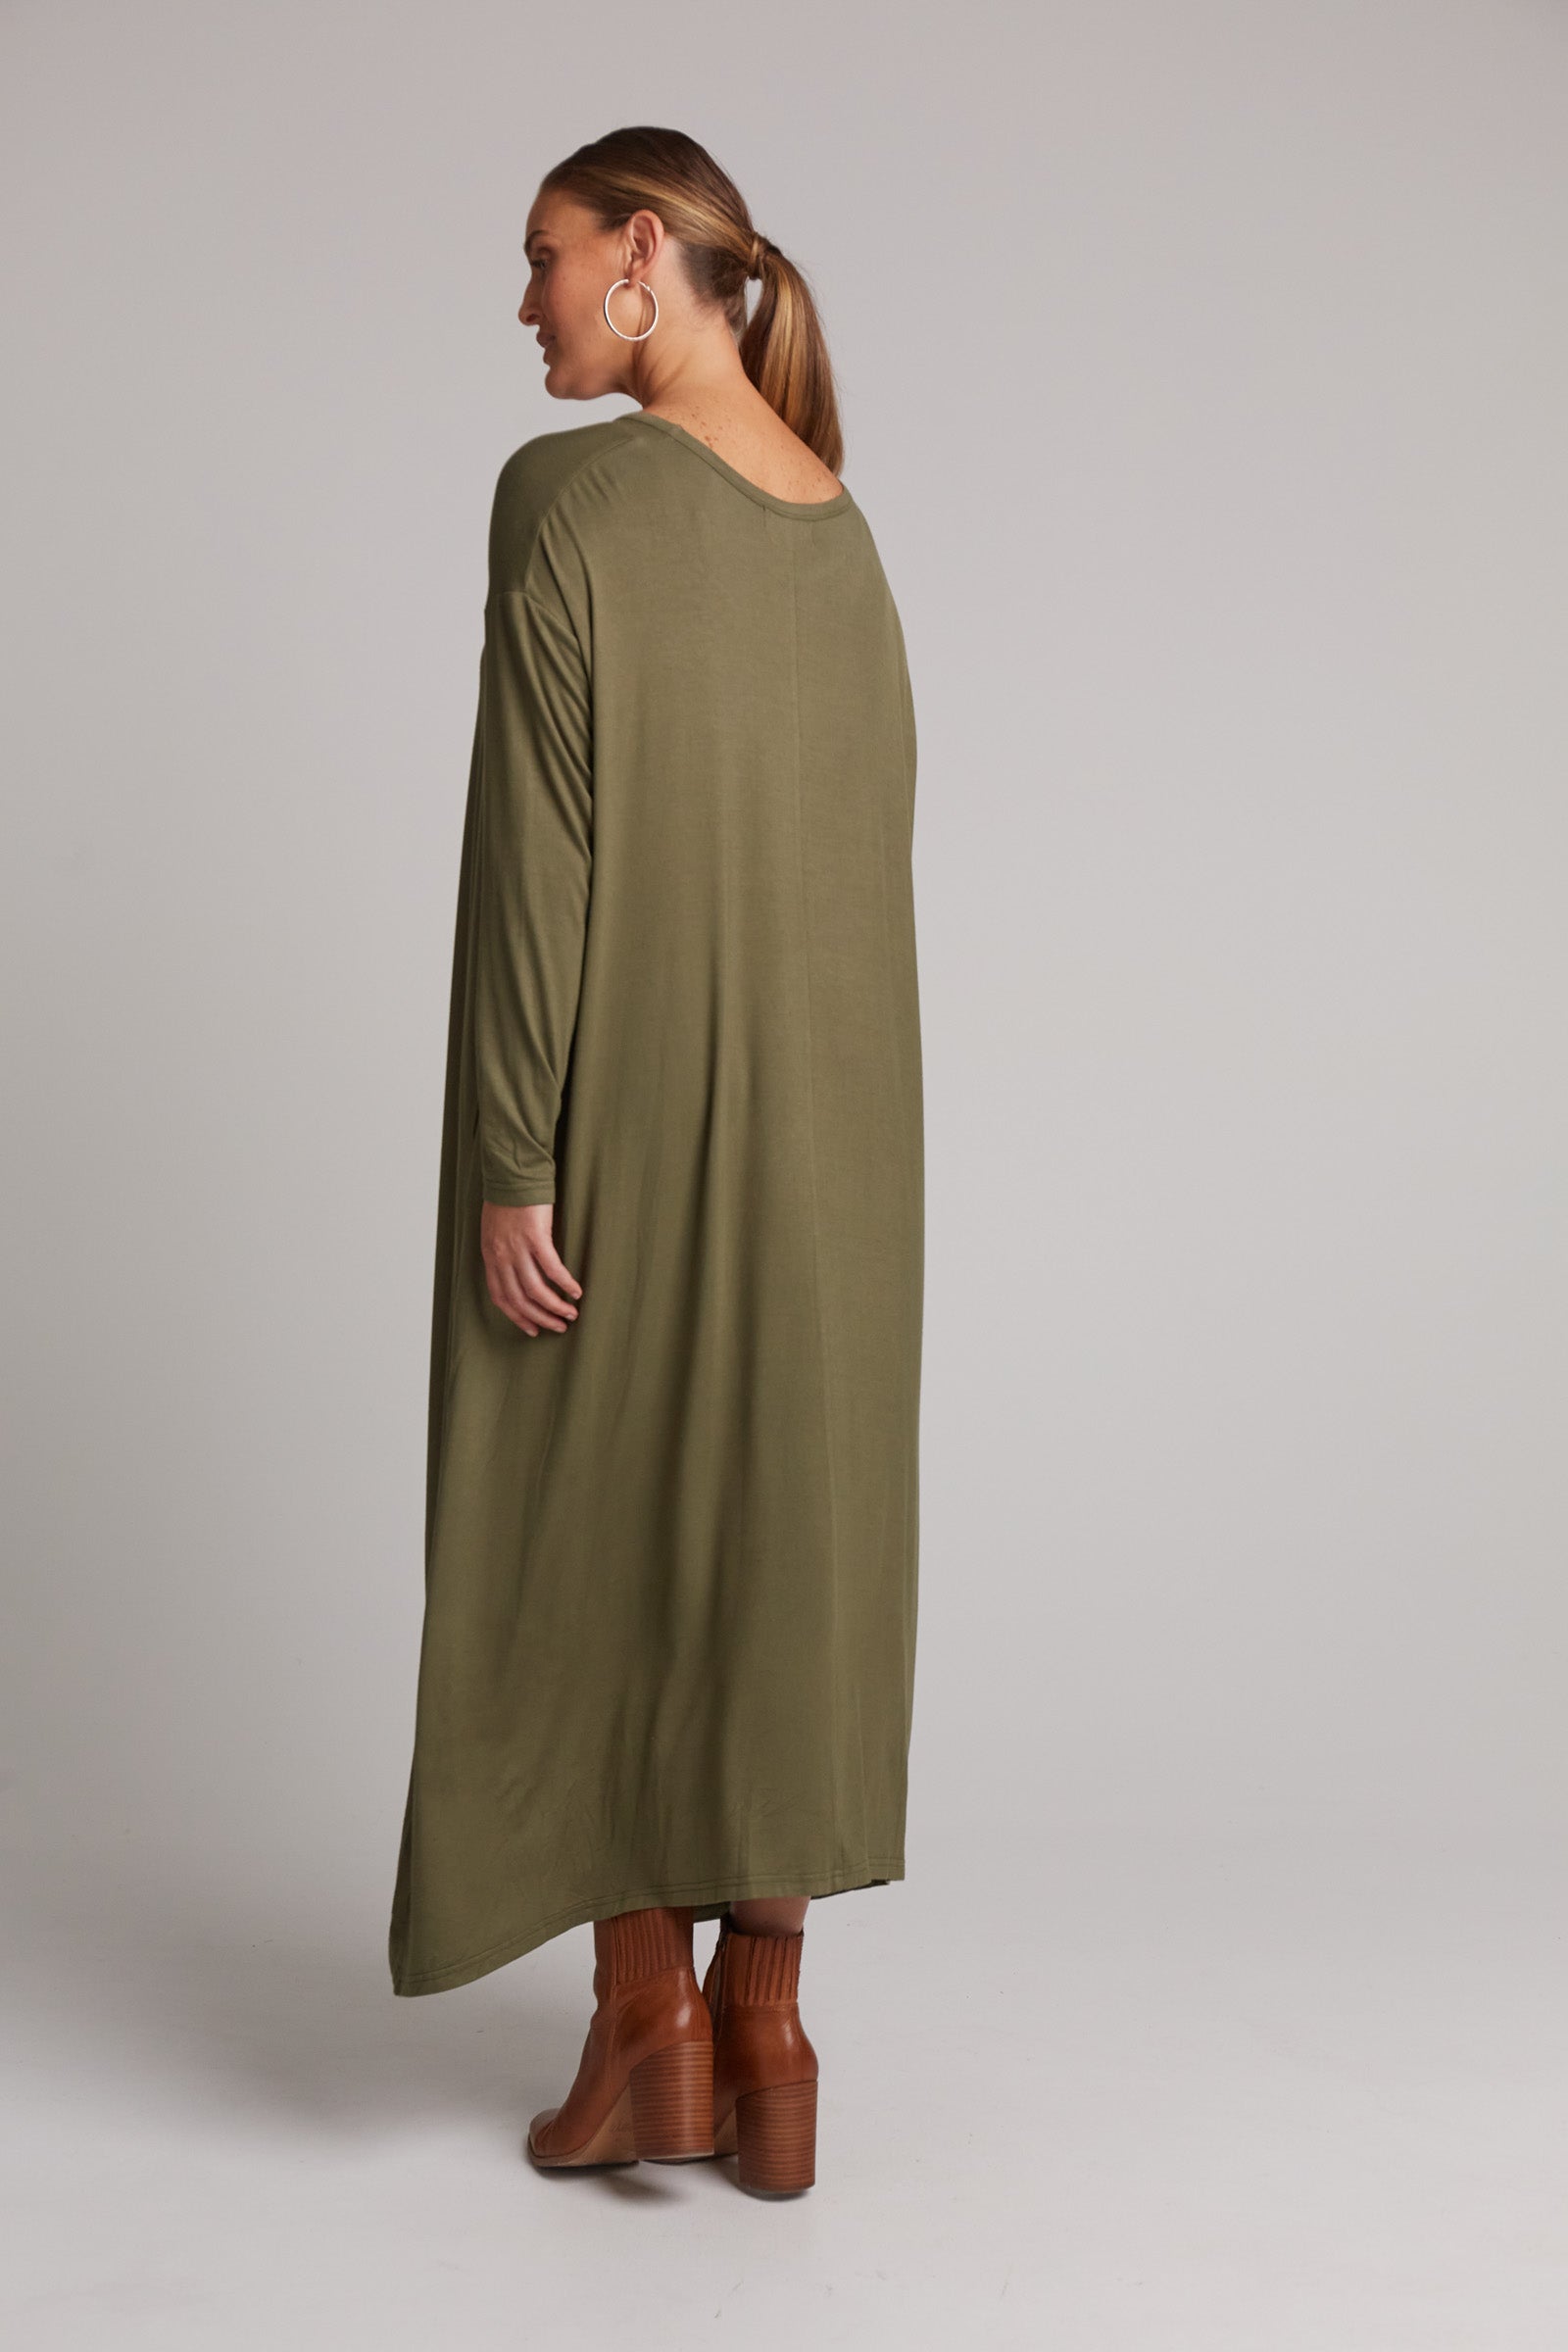 Studio Jersey Dress - Fern - eb&ive Clothing - Dress Maxi